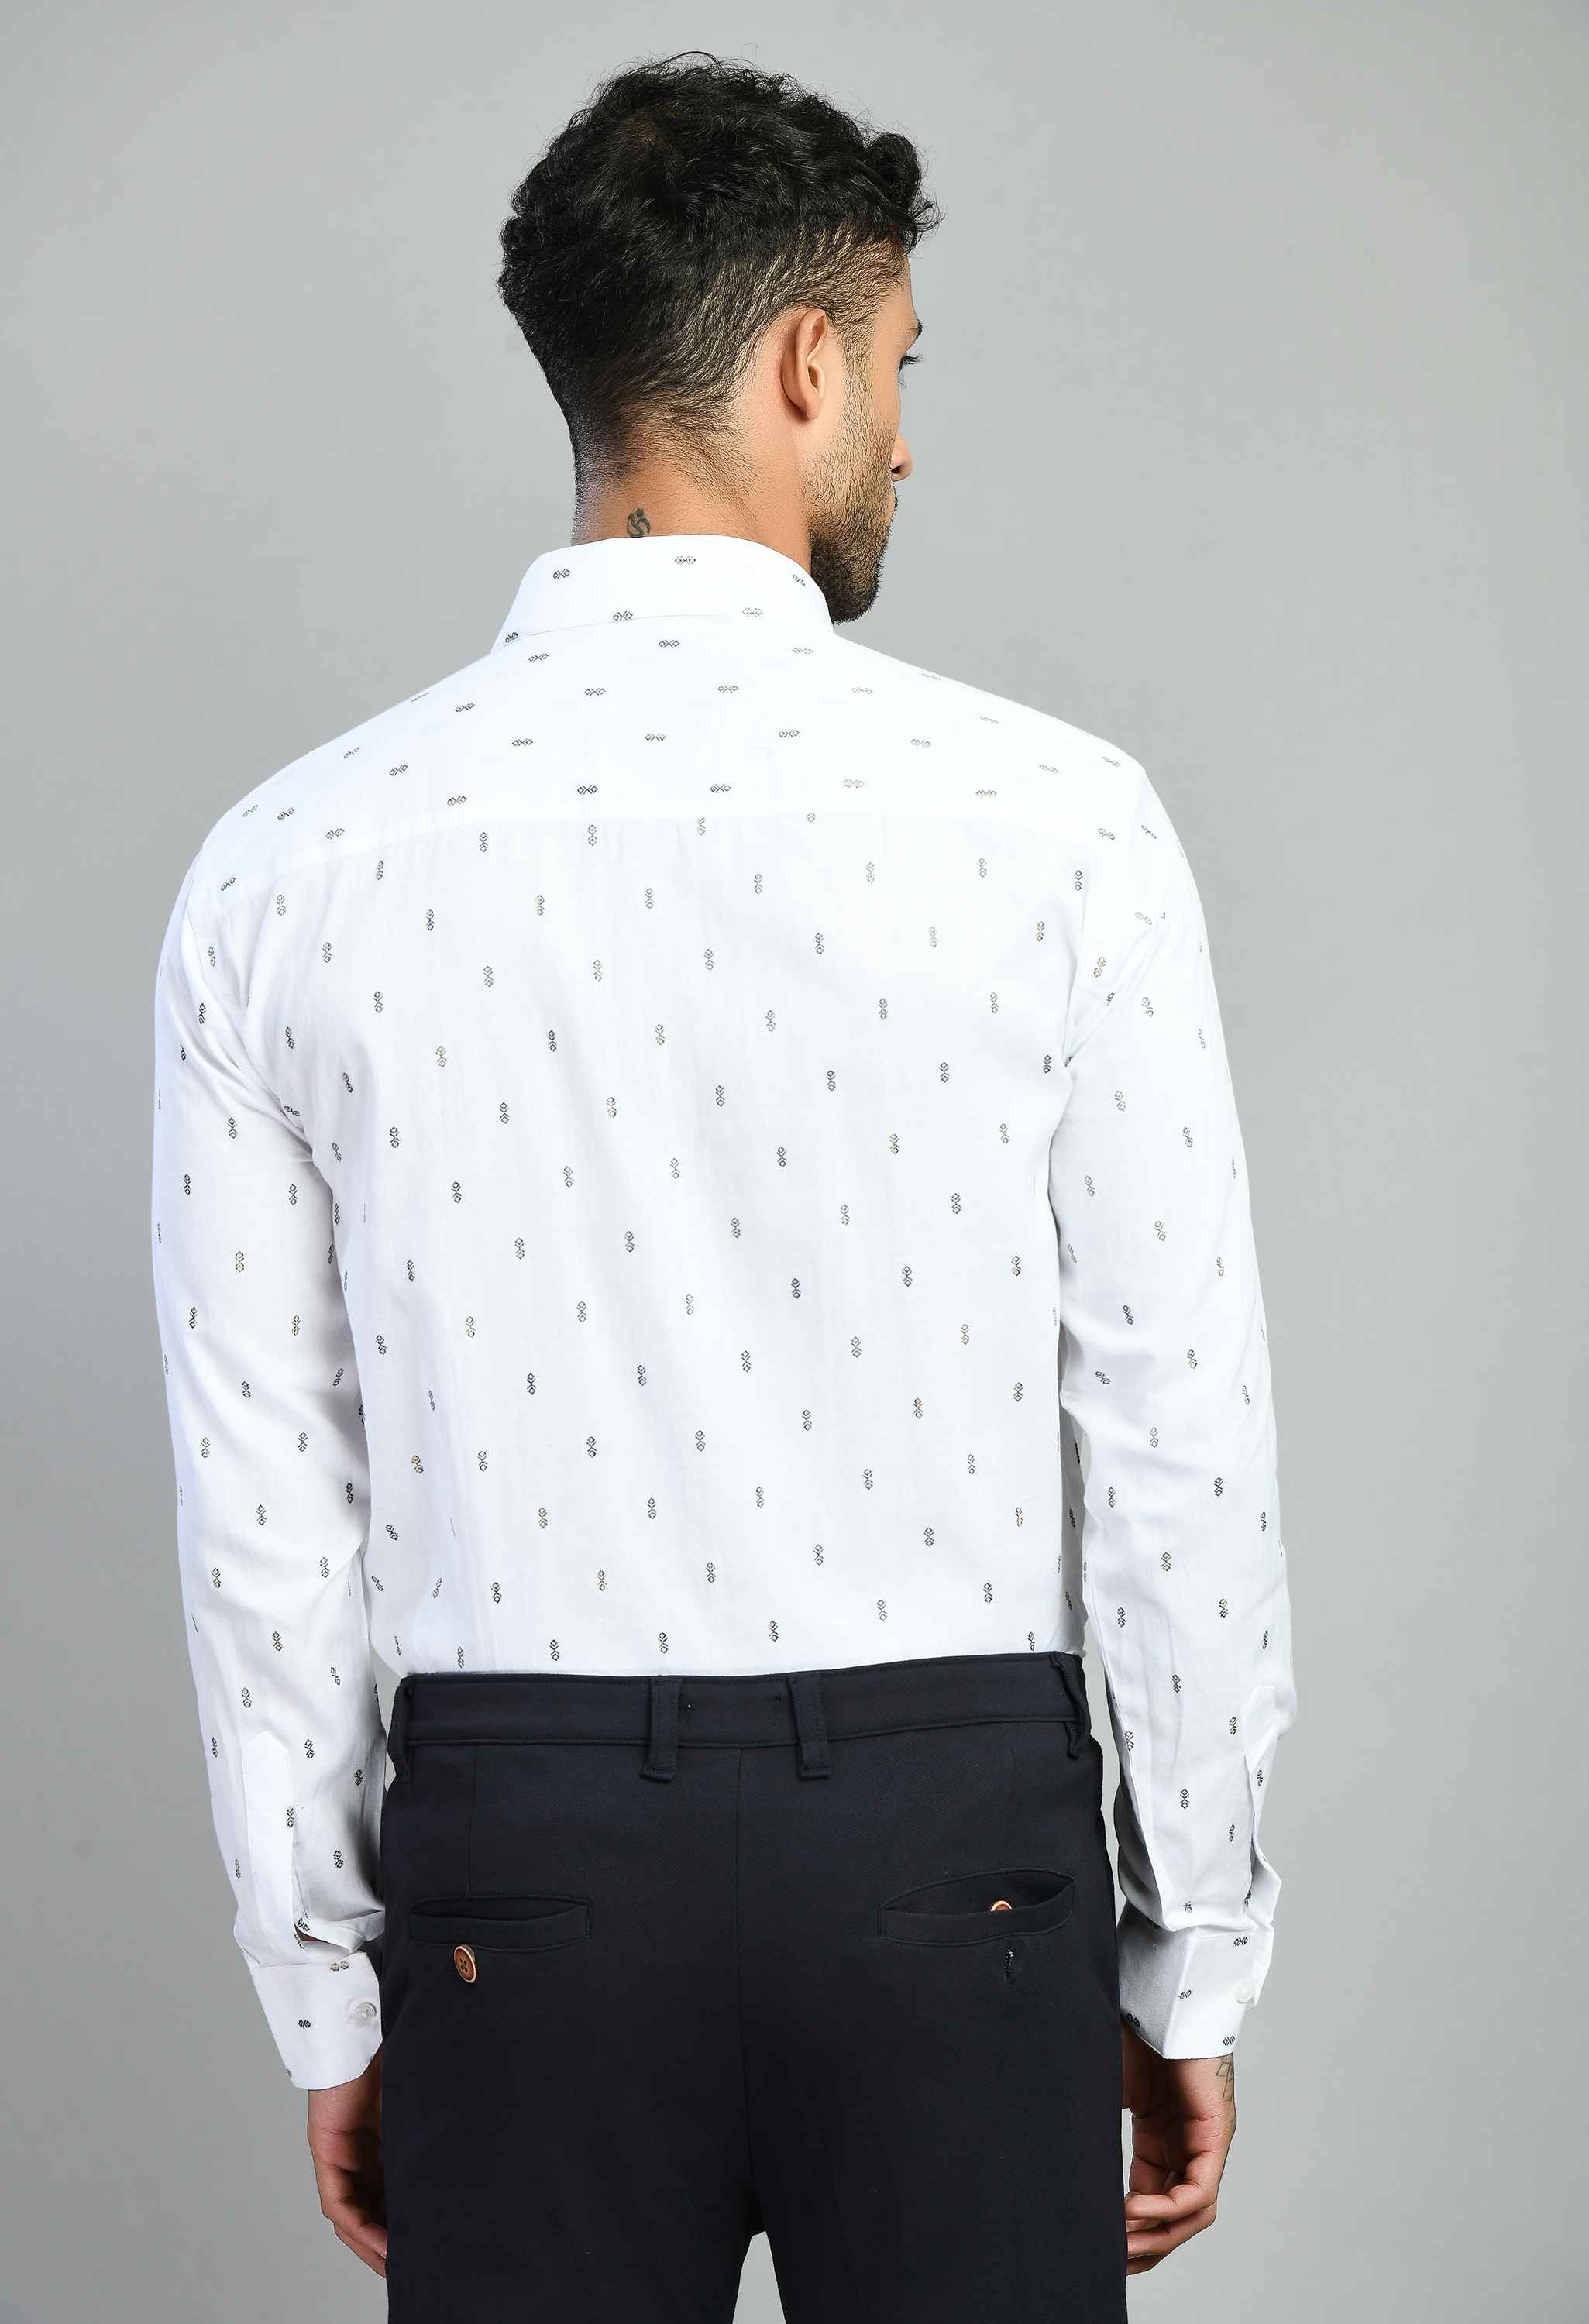 Men's Printed Cotton Slim Fit Formal Shirt